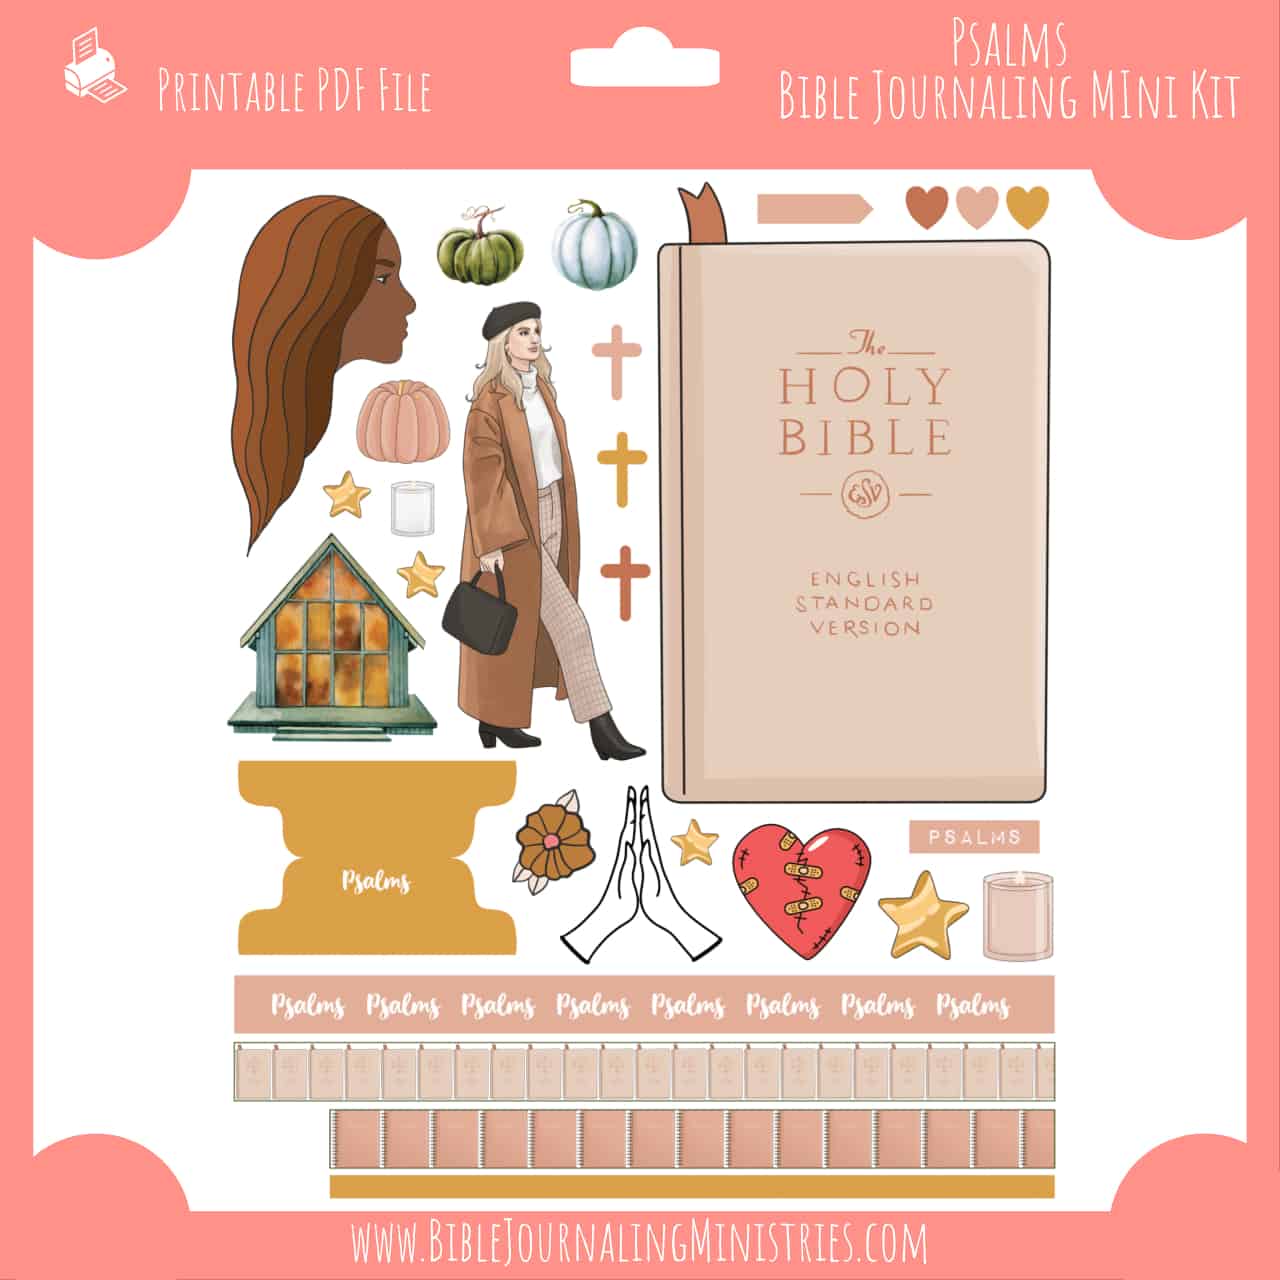 https://www.biblejournalingministries.com/wp-content/uploads/2022/07/Psalms-Bible-Journaling-Mini-Kit-Large.jpg